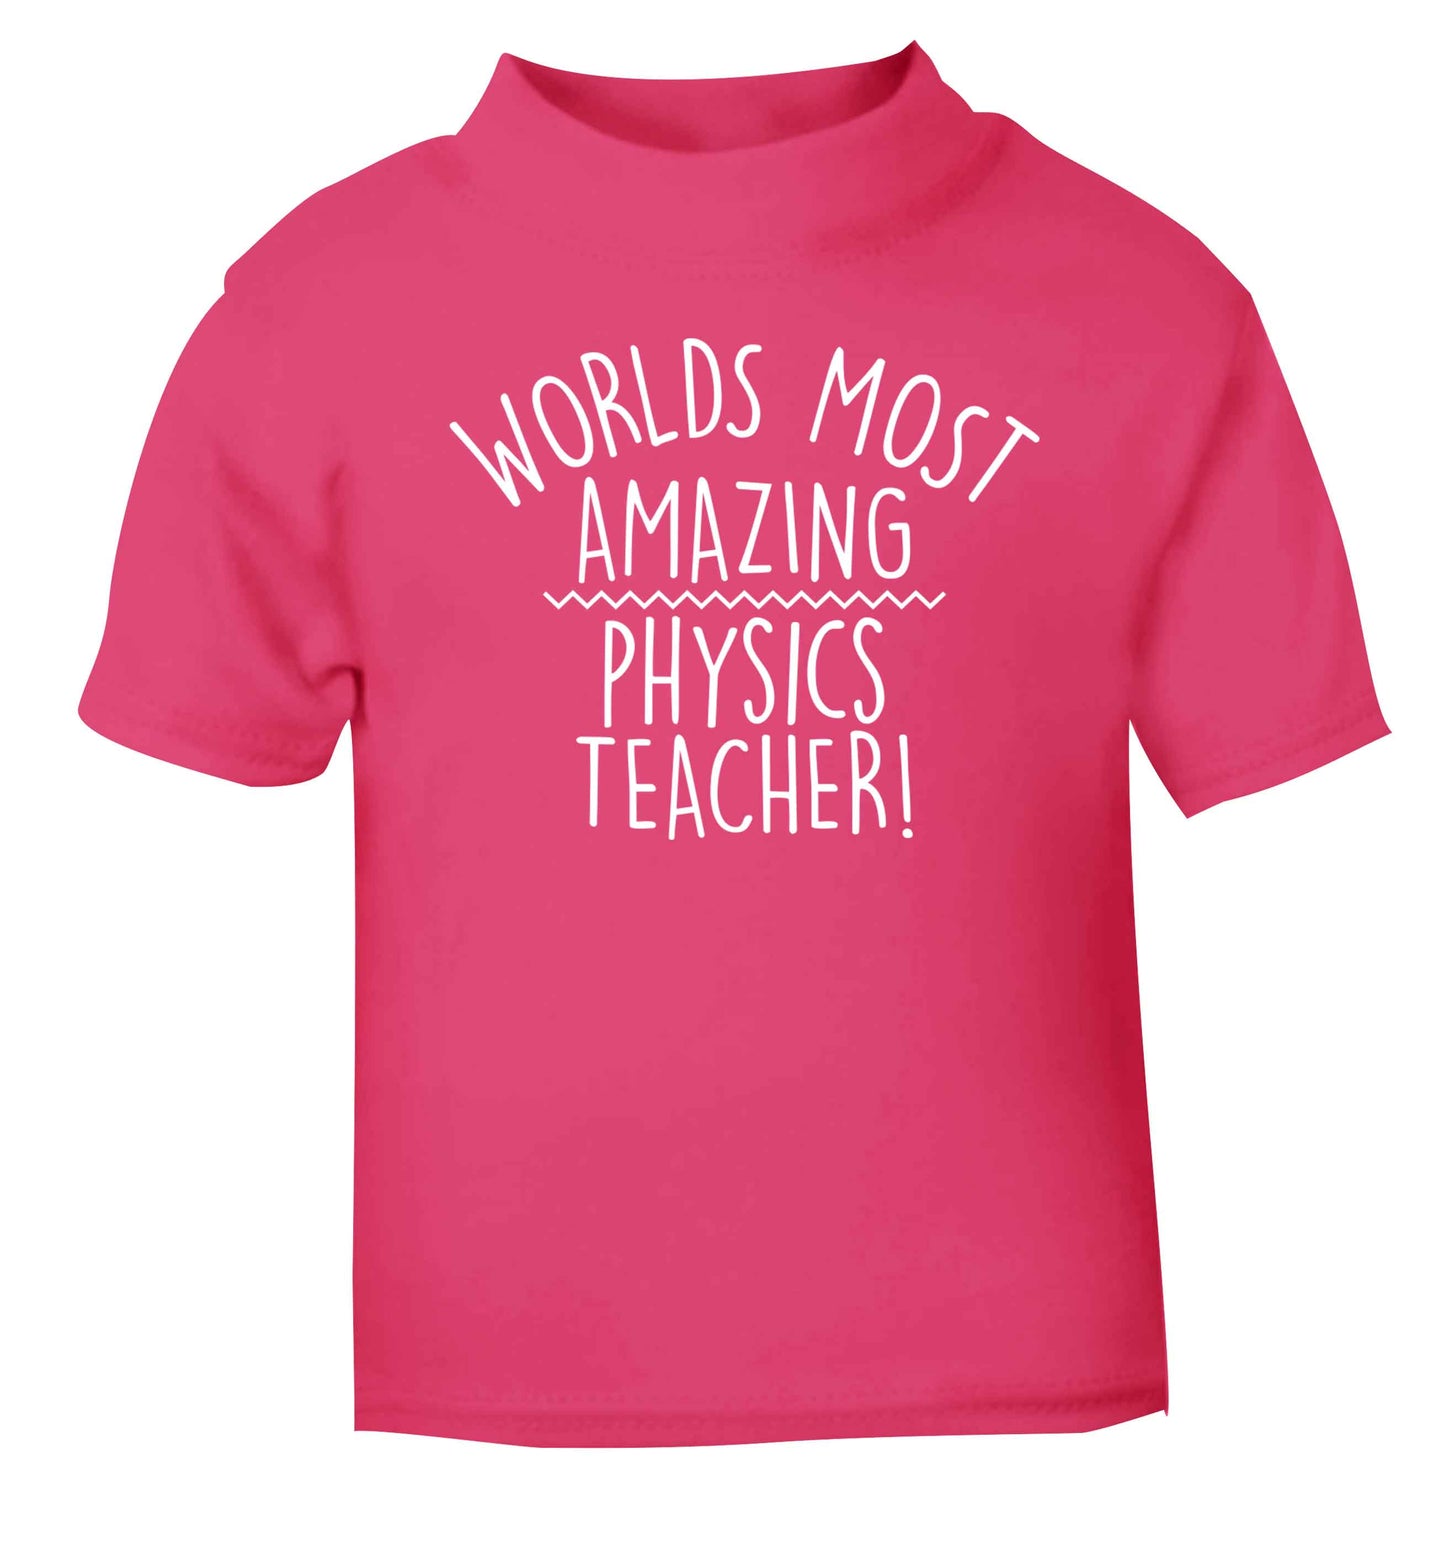 Worlds most amazing physics teacher pink baby toddler Tshirt 2 Years